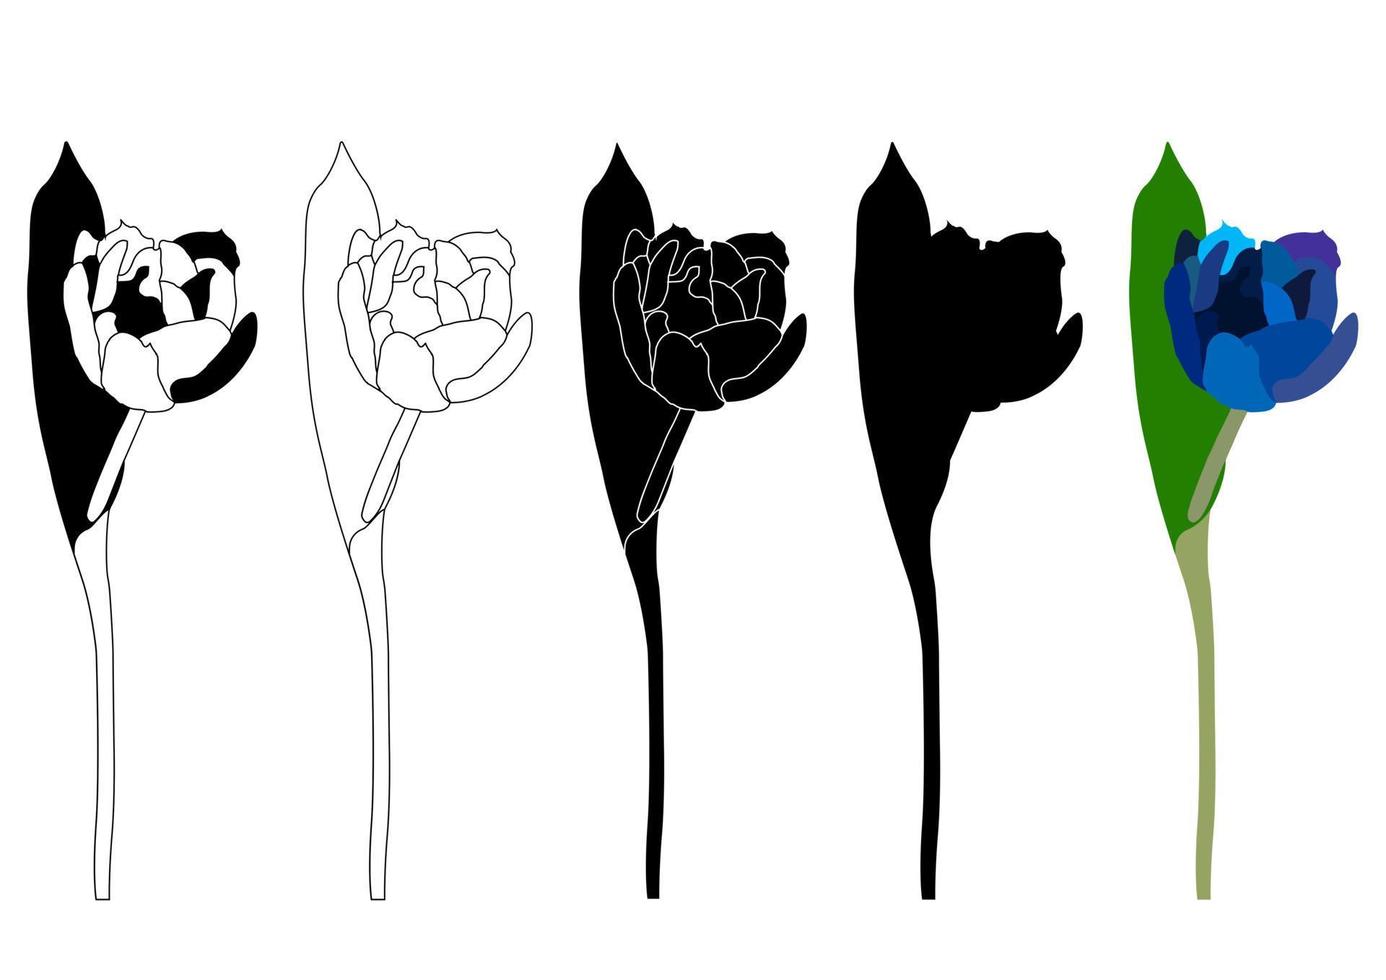 silueta de contorno de boceto conjunto aislado de flor de tulipán. dibujo de línea de garabato. vector